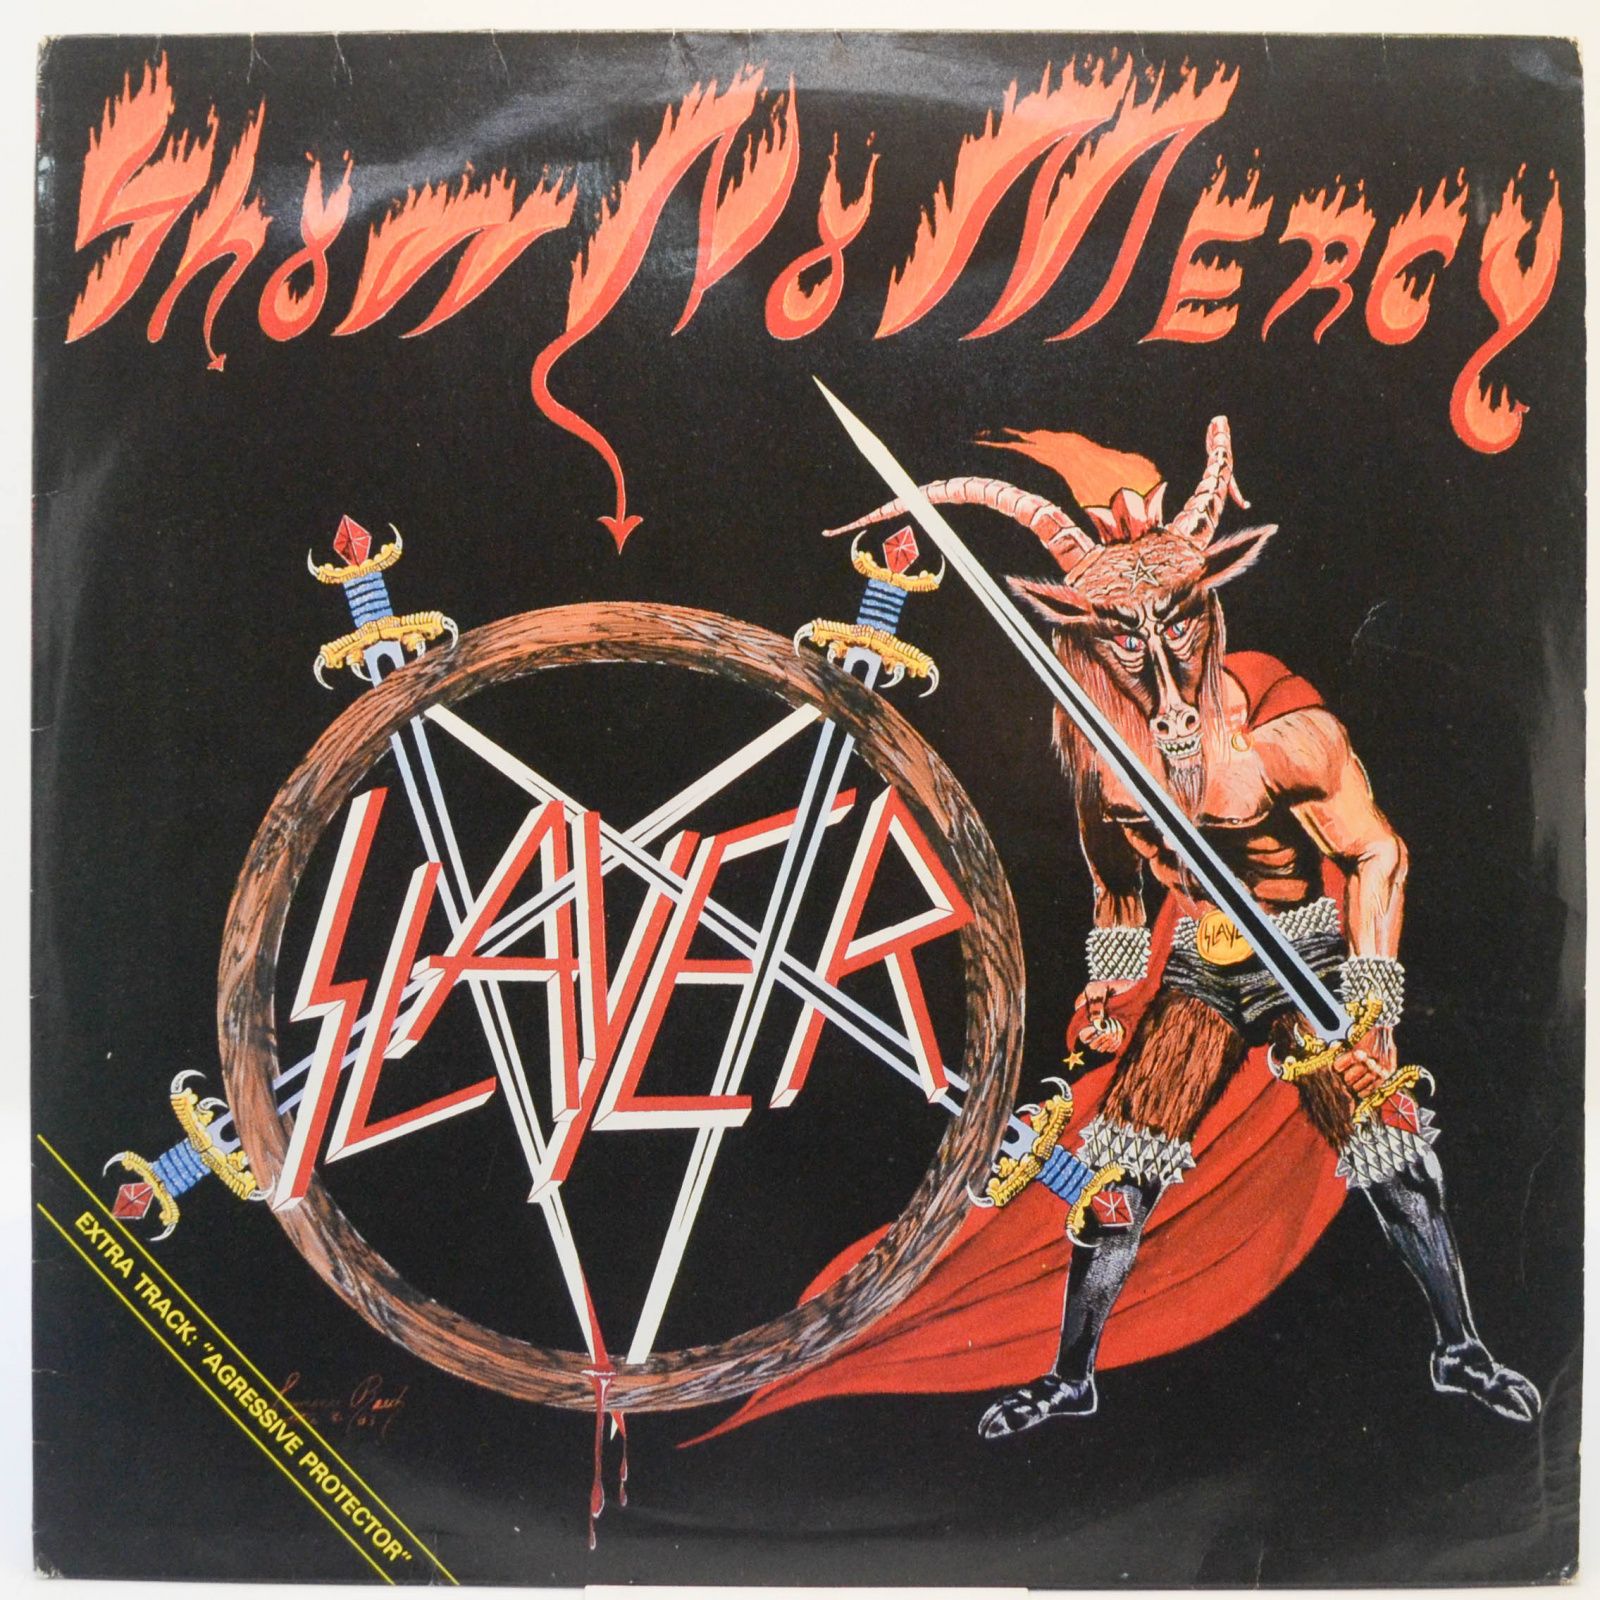 Slayer — Show No Mercy, 1984